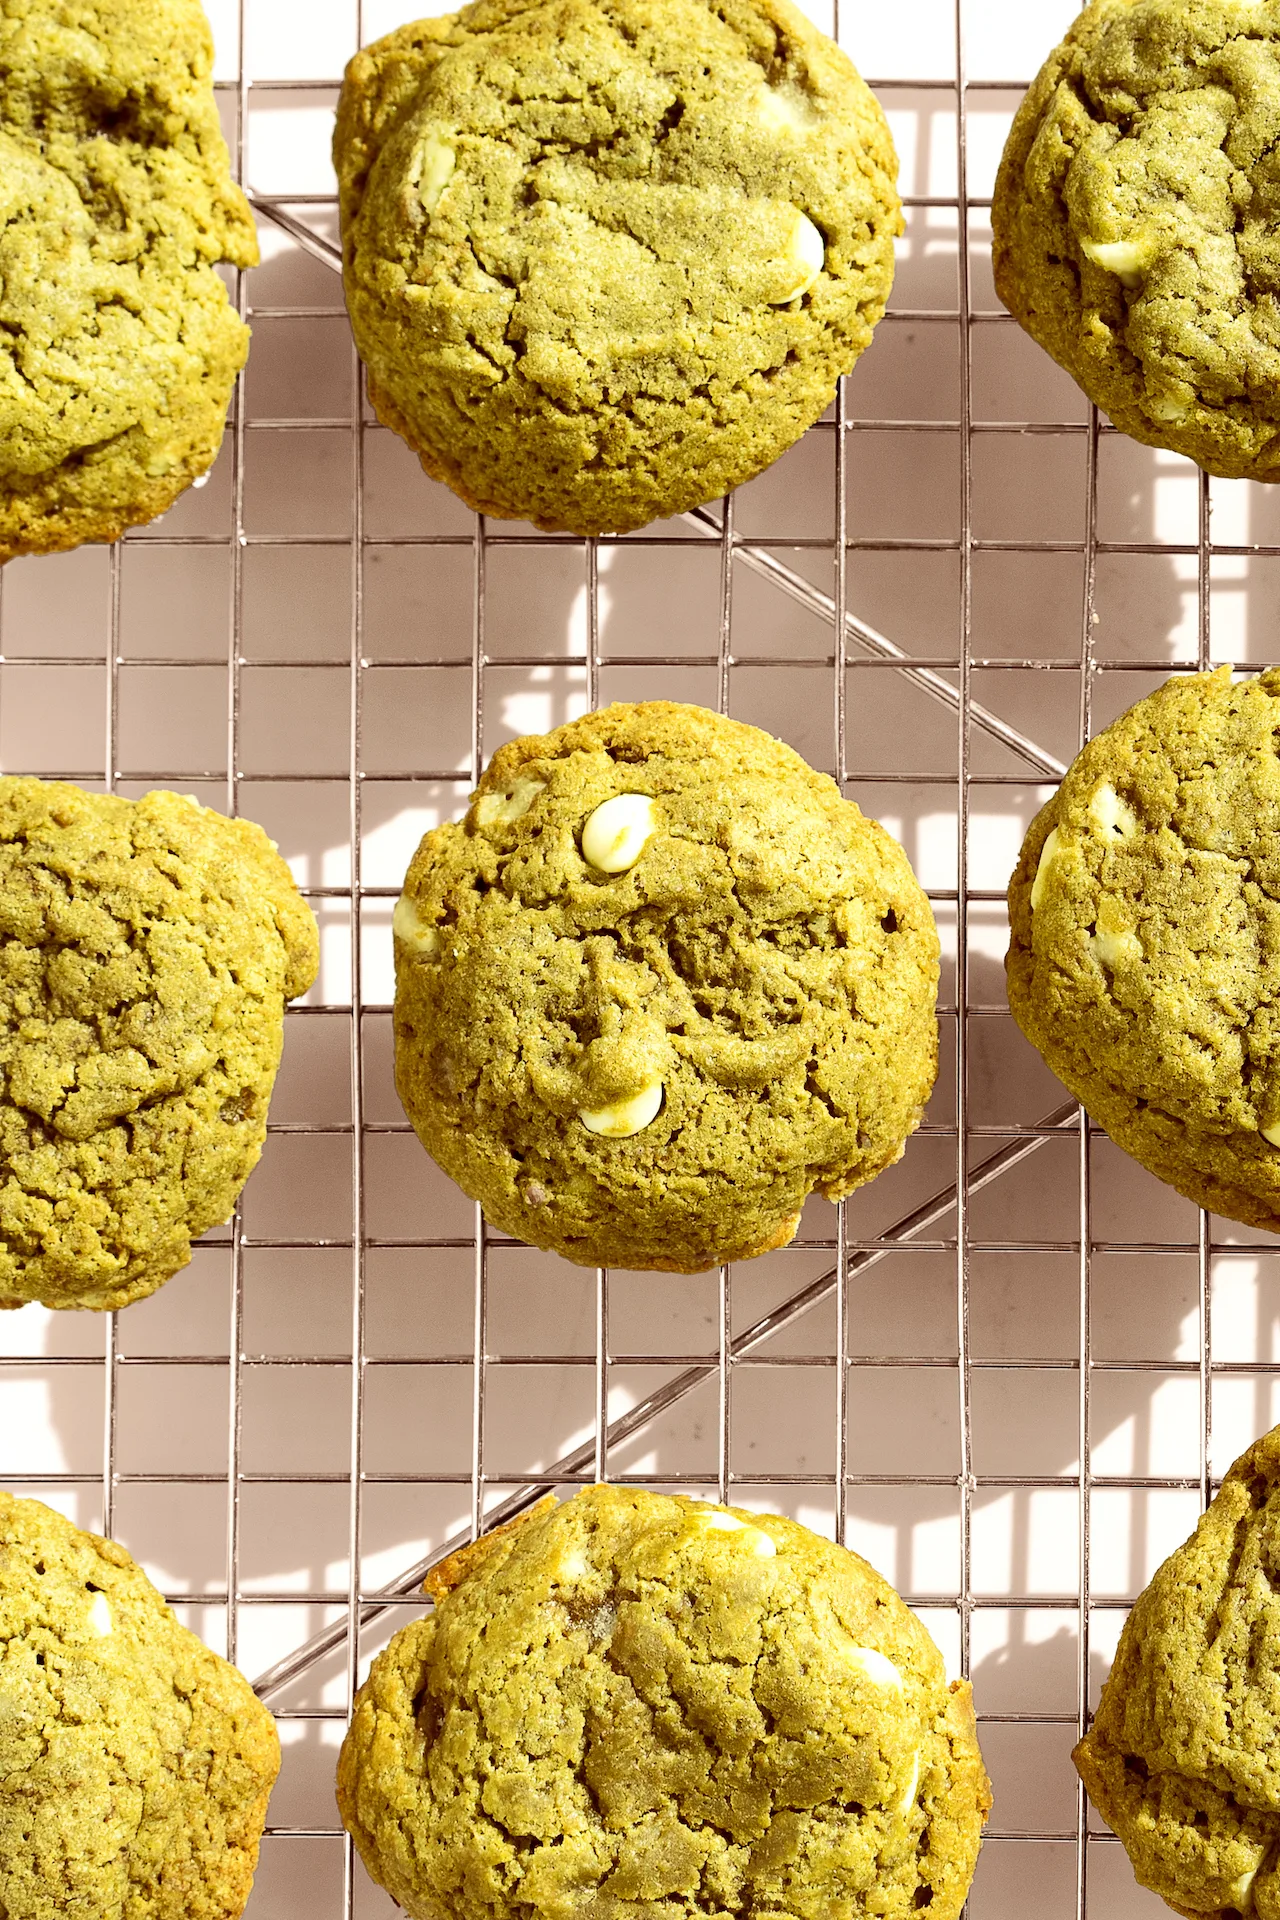 Matcha Cookies Recipe